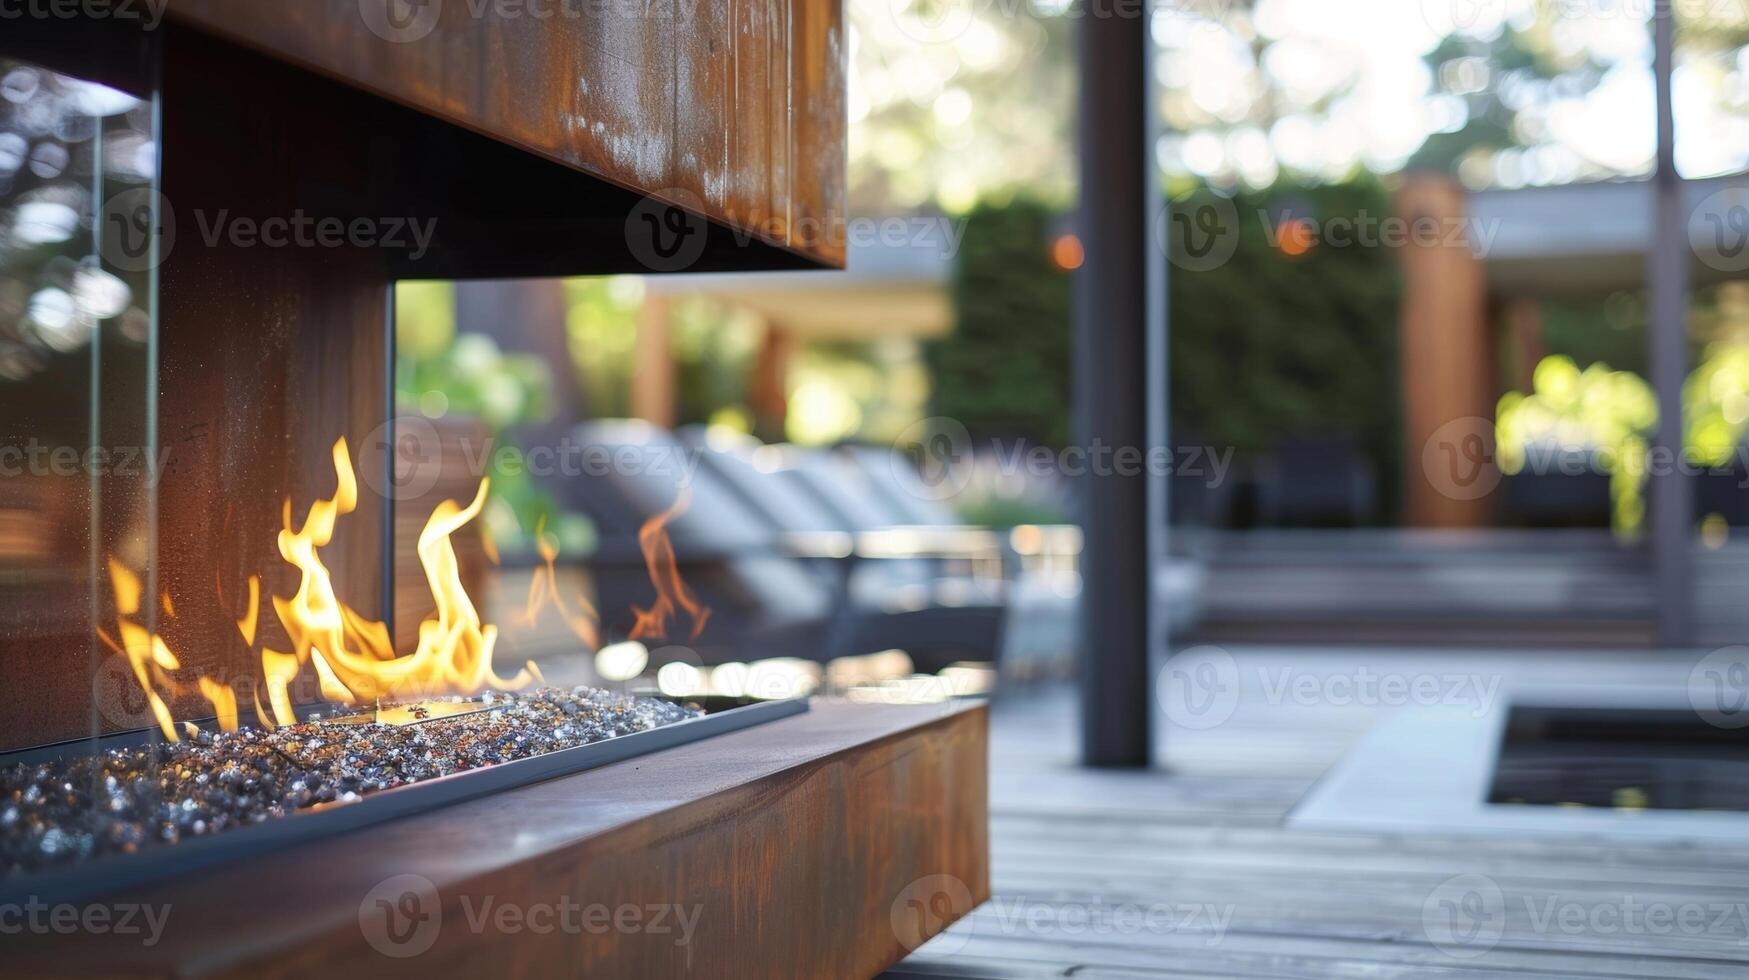 A contemporary fireplace blending wood and metal materials in a modular design for a modern look. 2d flat cartoon photo